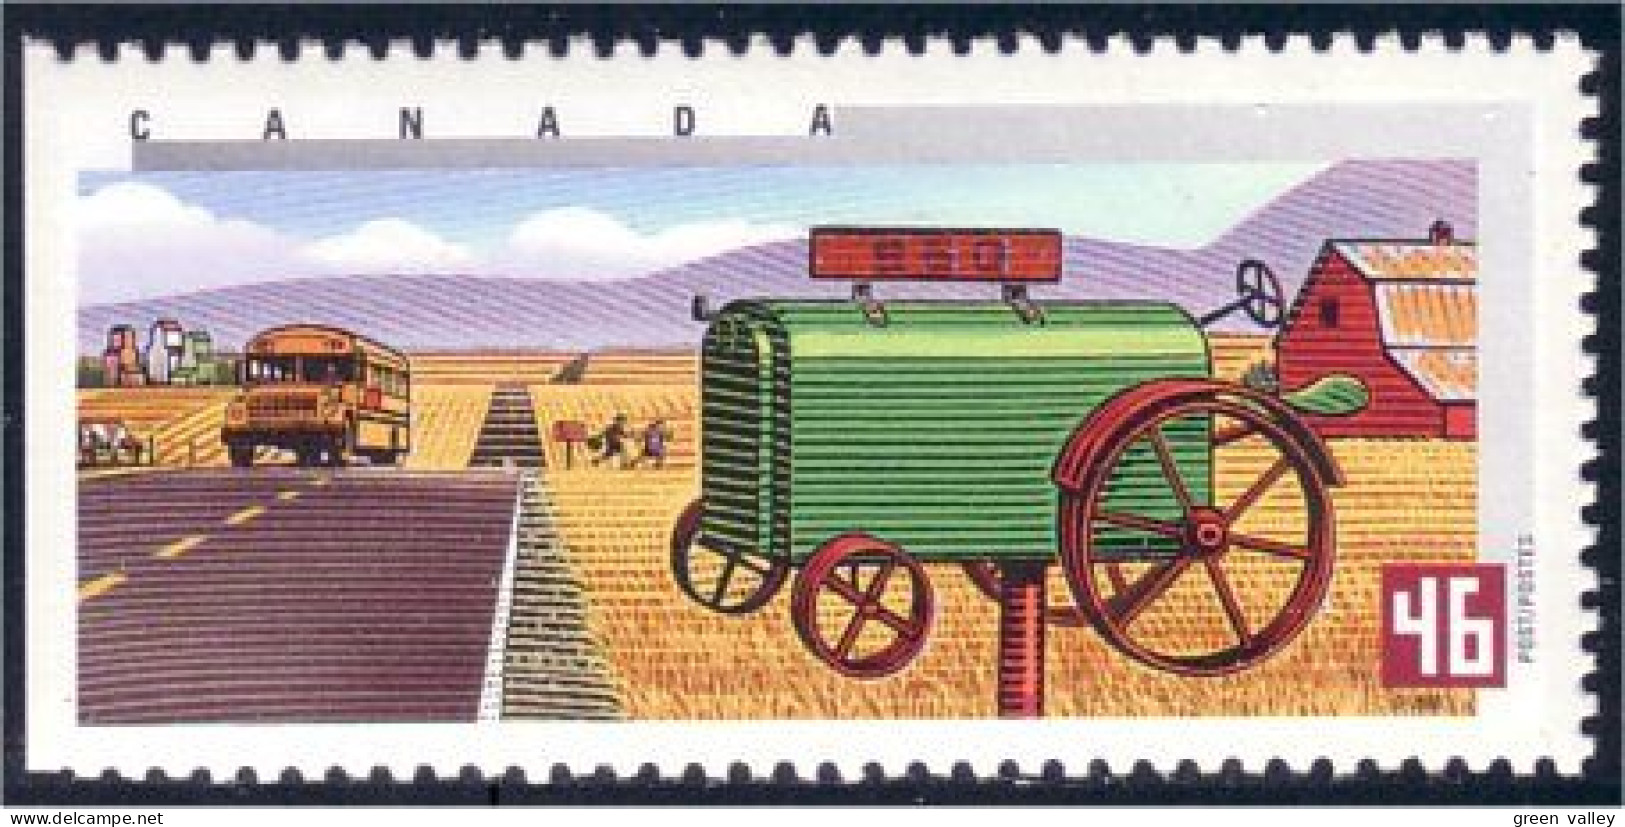 Canada Boite Lettres Mailbox Vache Cow Tracteur Tractor Autobus MNH ** Neuf SC (C18-51a) - Neufs